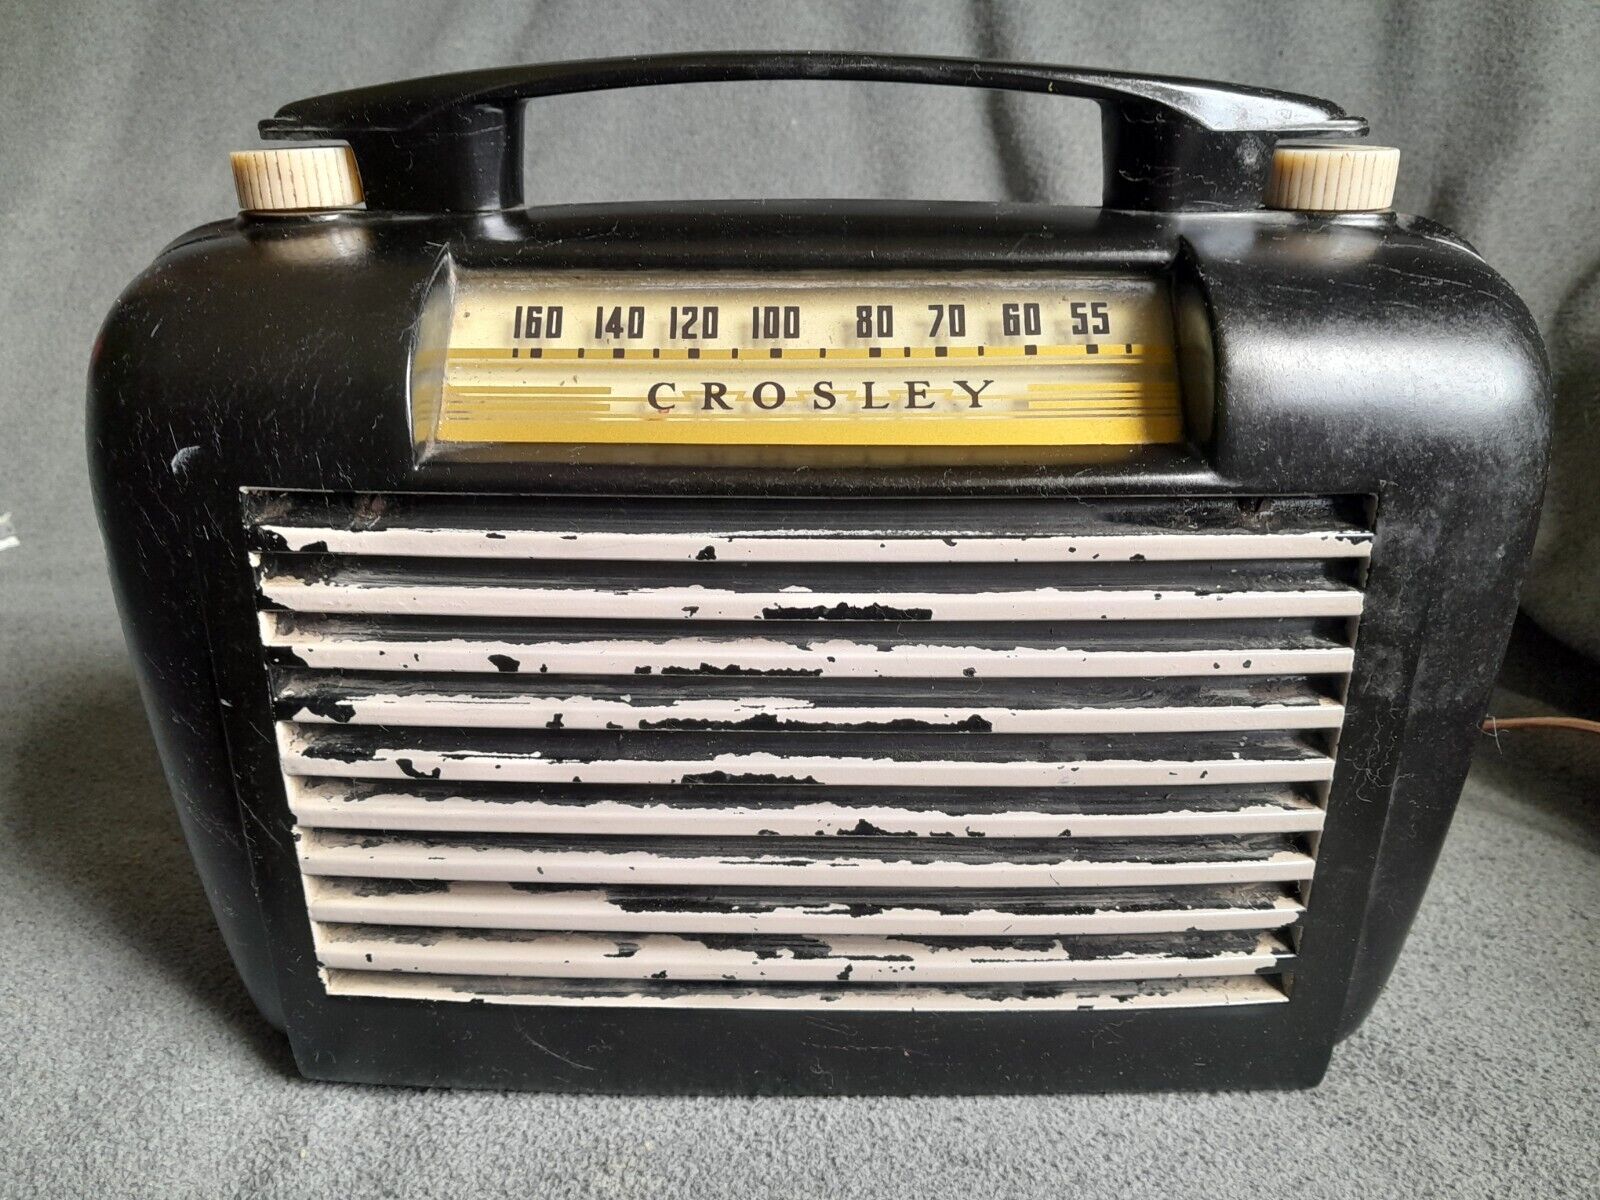 Gorgeous Vintage 1940s Crosley Bakelite Tube Radio Intact With Vintage Look Read